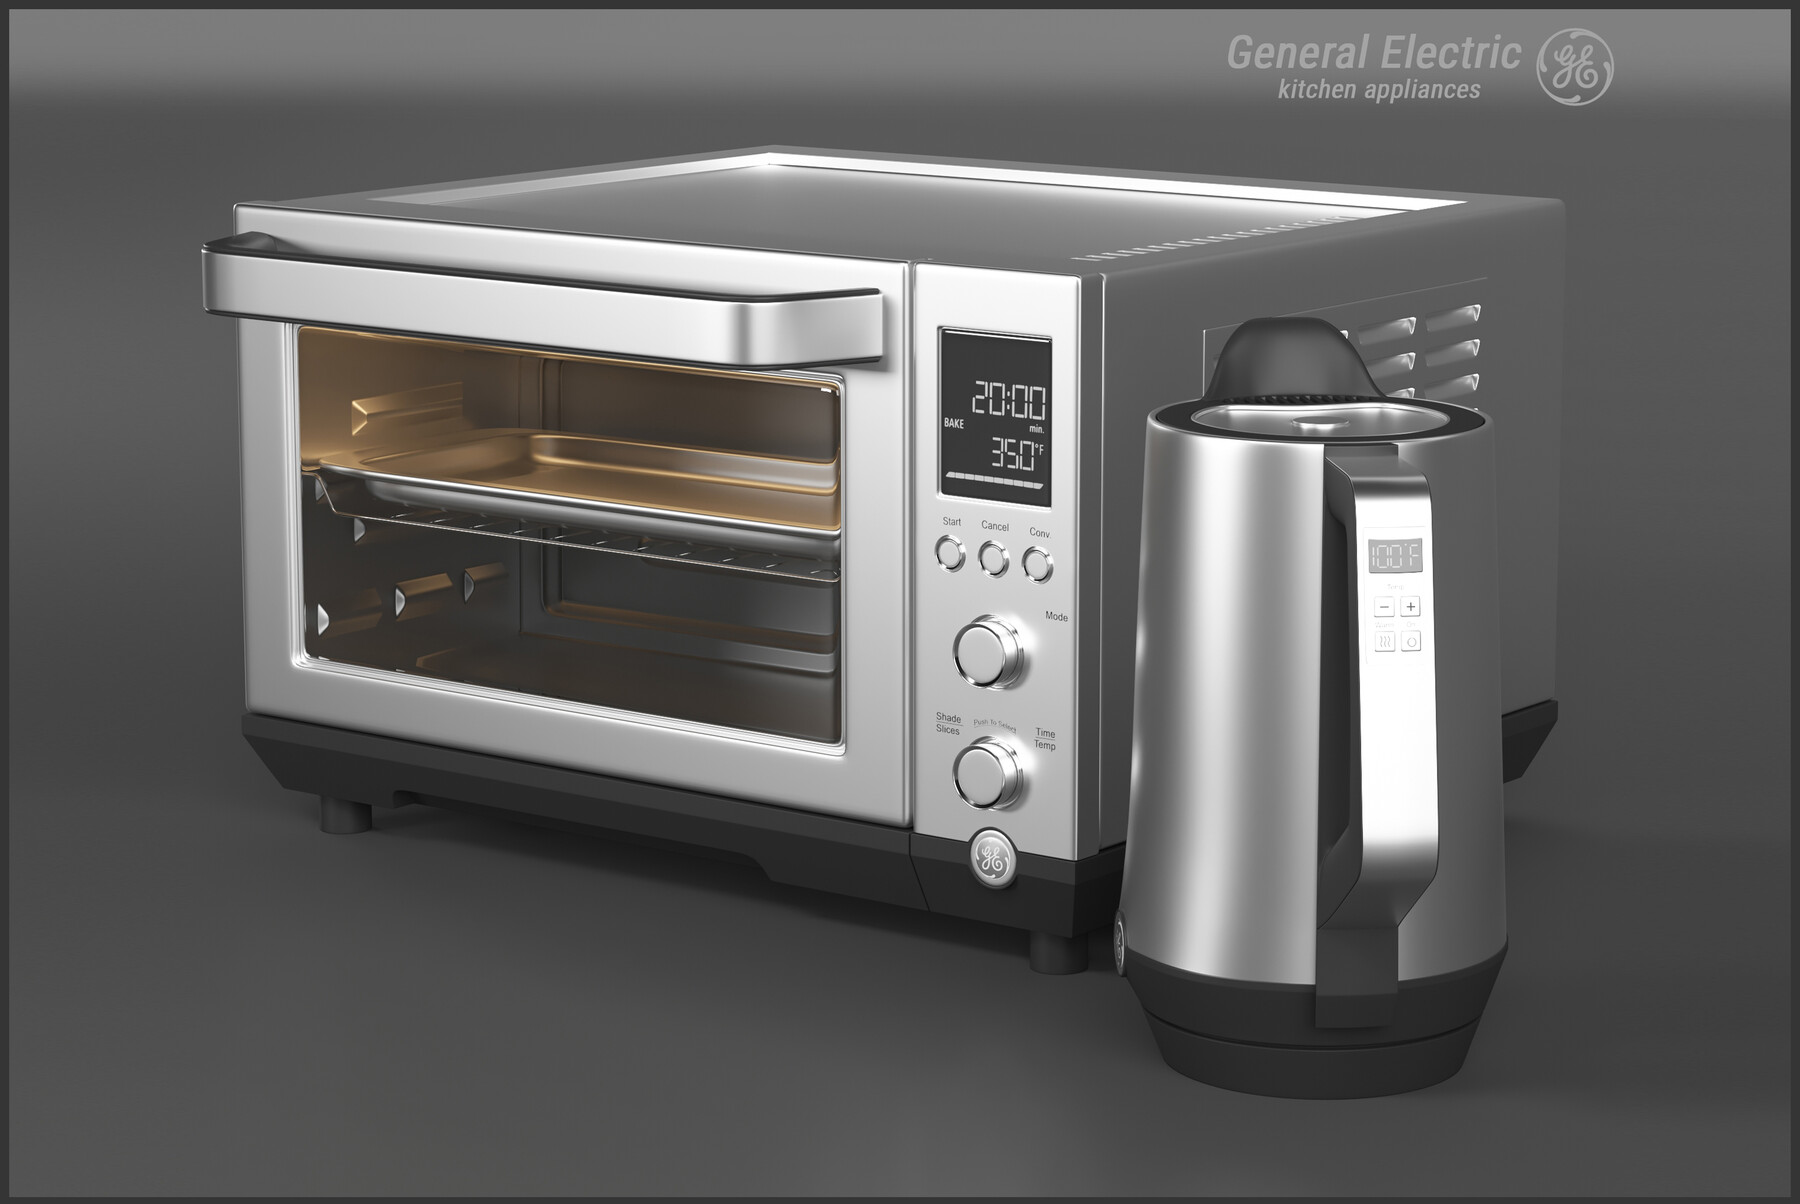 General Electric Kitchen Appliances